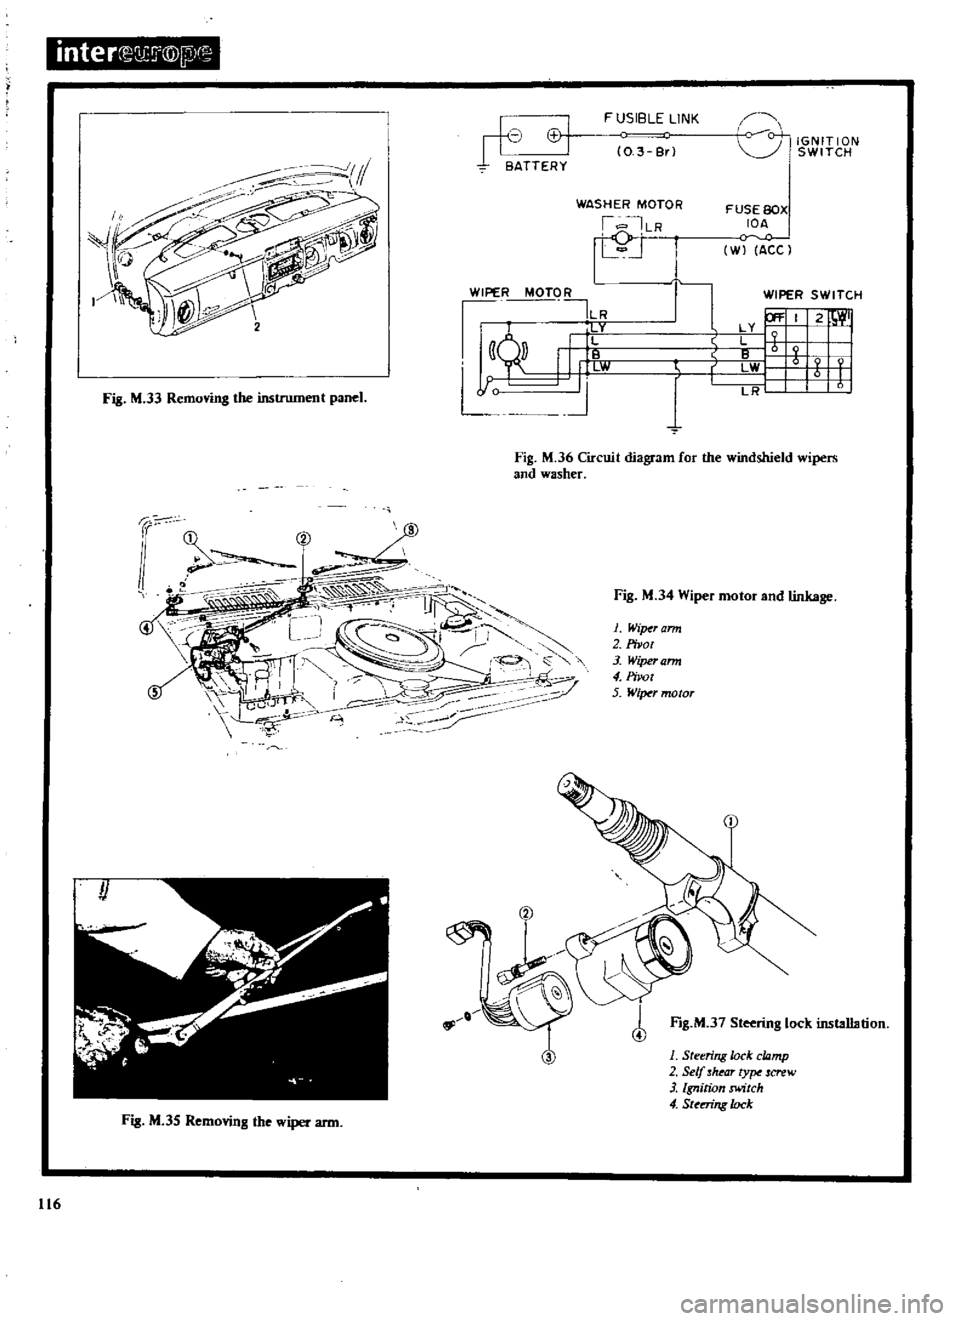 DATSUN 610 1969  Workshop Manual 
inter

@IP

Fig 
M 
33

Removing 
the 
instrument

panel 
h 
J 
I

II 
VI

BATTERY 
FUSIBLE

LINK

0 
3 
Br

WASHER 
MOTOR

I

ILR

rj

WIPER 
MOTO 
R

ILR

lity

111 
W

J
9P

l 
l 
0

0

IGNITION

